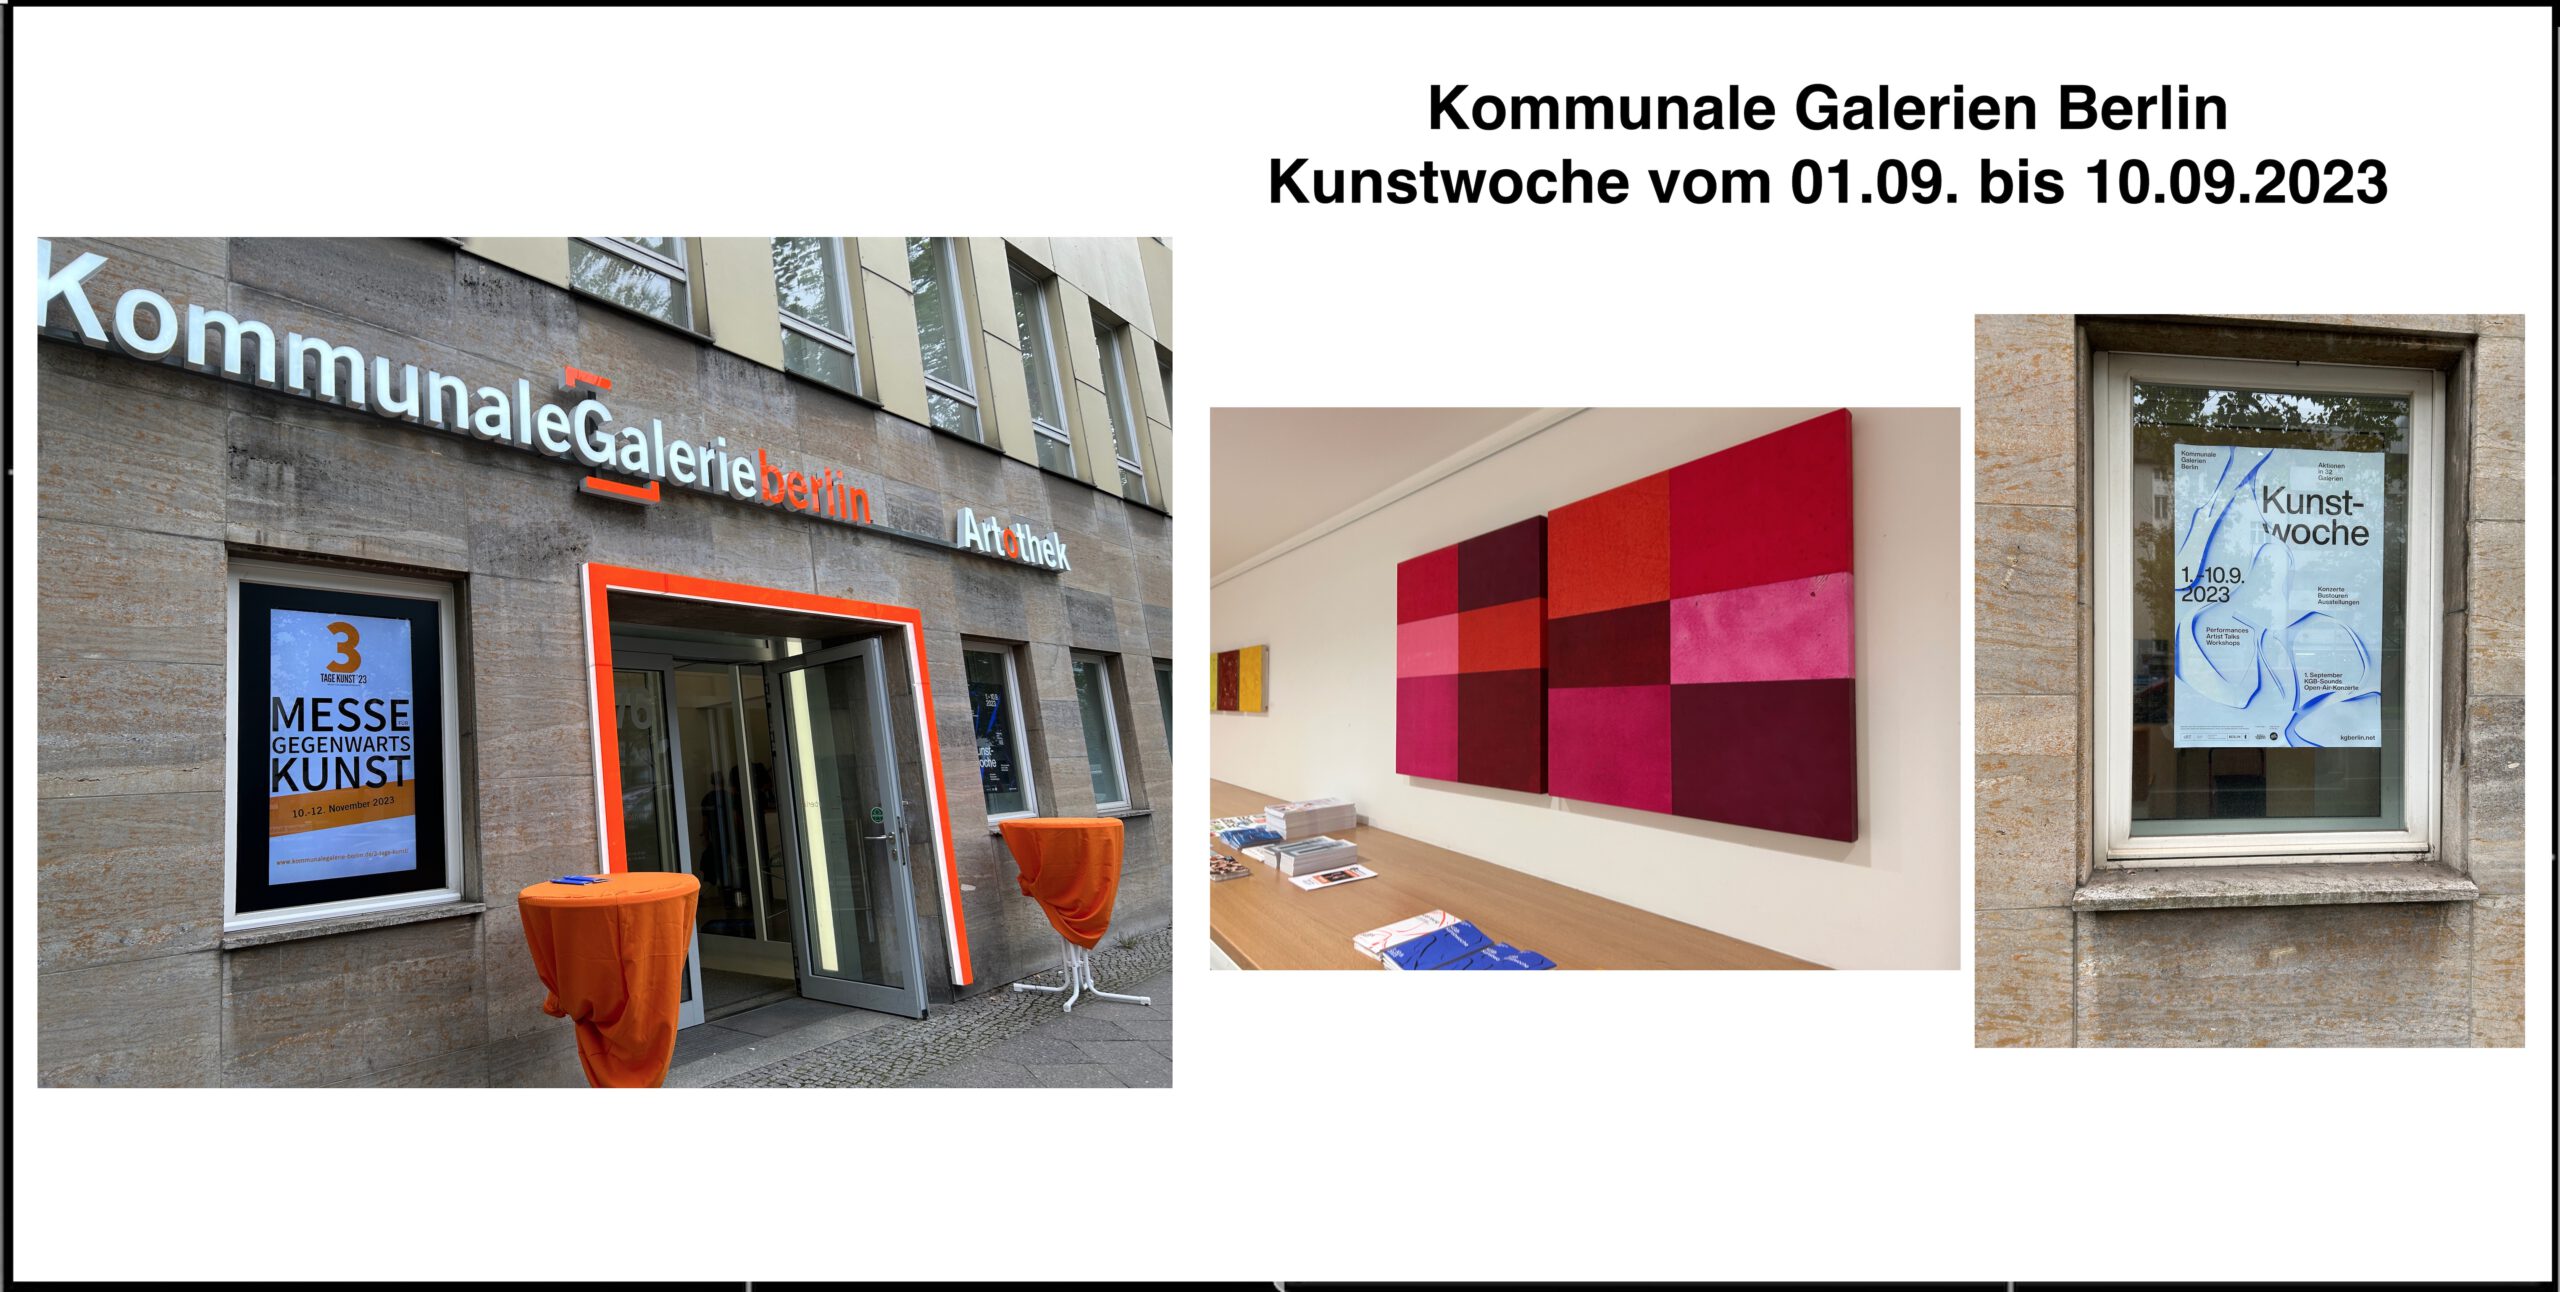 Color Field Painting. Kommunale Galerien Berlin. Kunstwoche 2023 mit Farbfeldmalerei von Thomas Peter Kausel